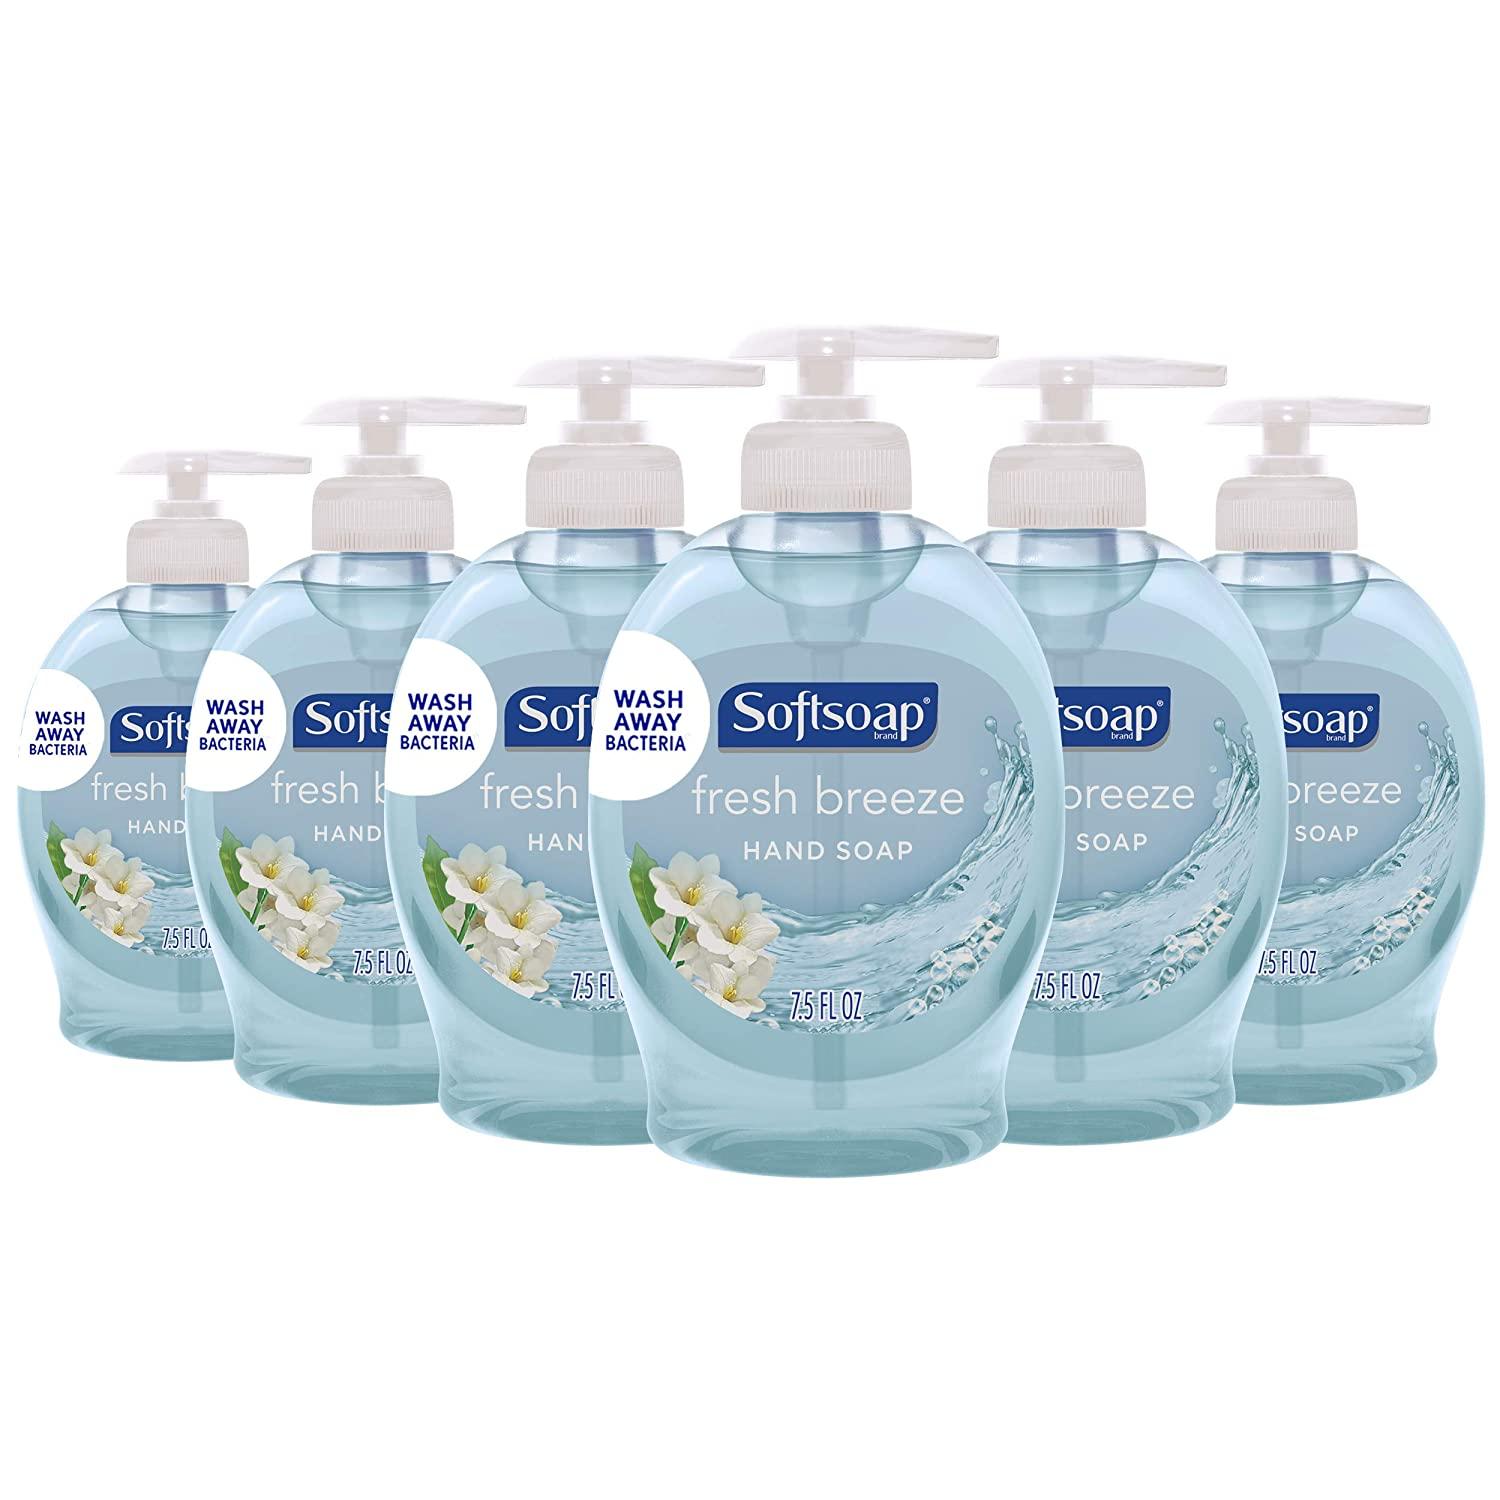 Softsoap Liquid Hand Soap $5 Off Coupon